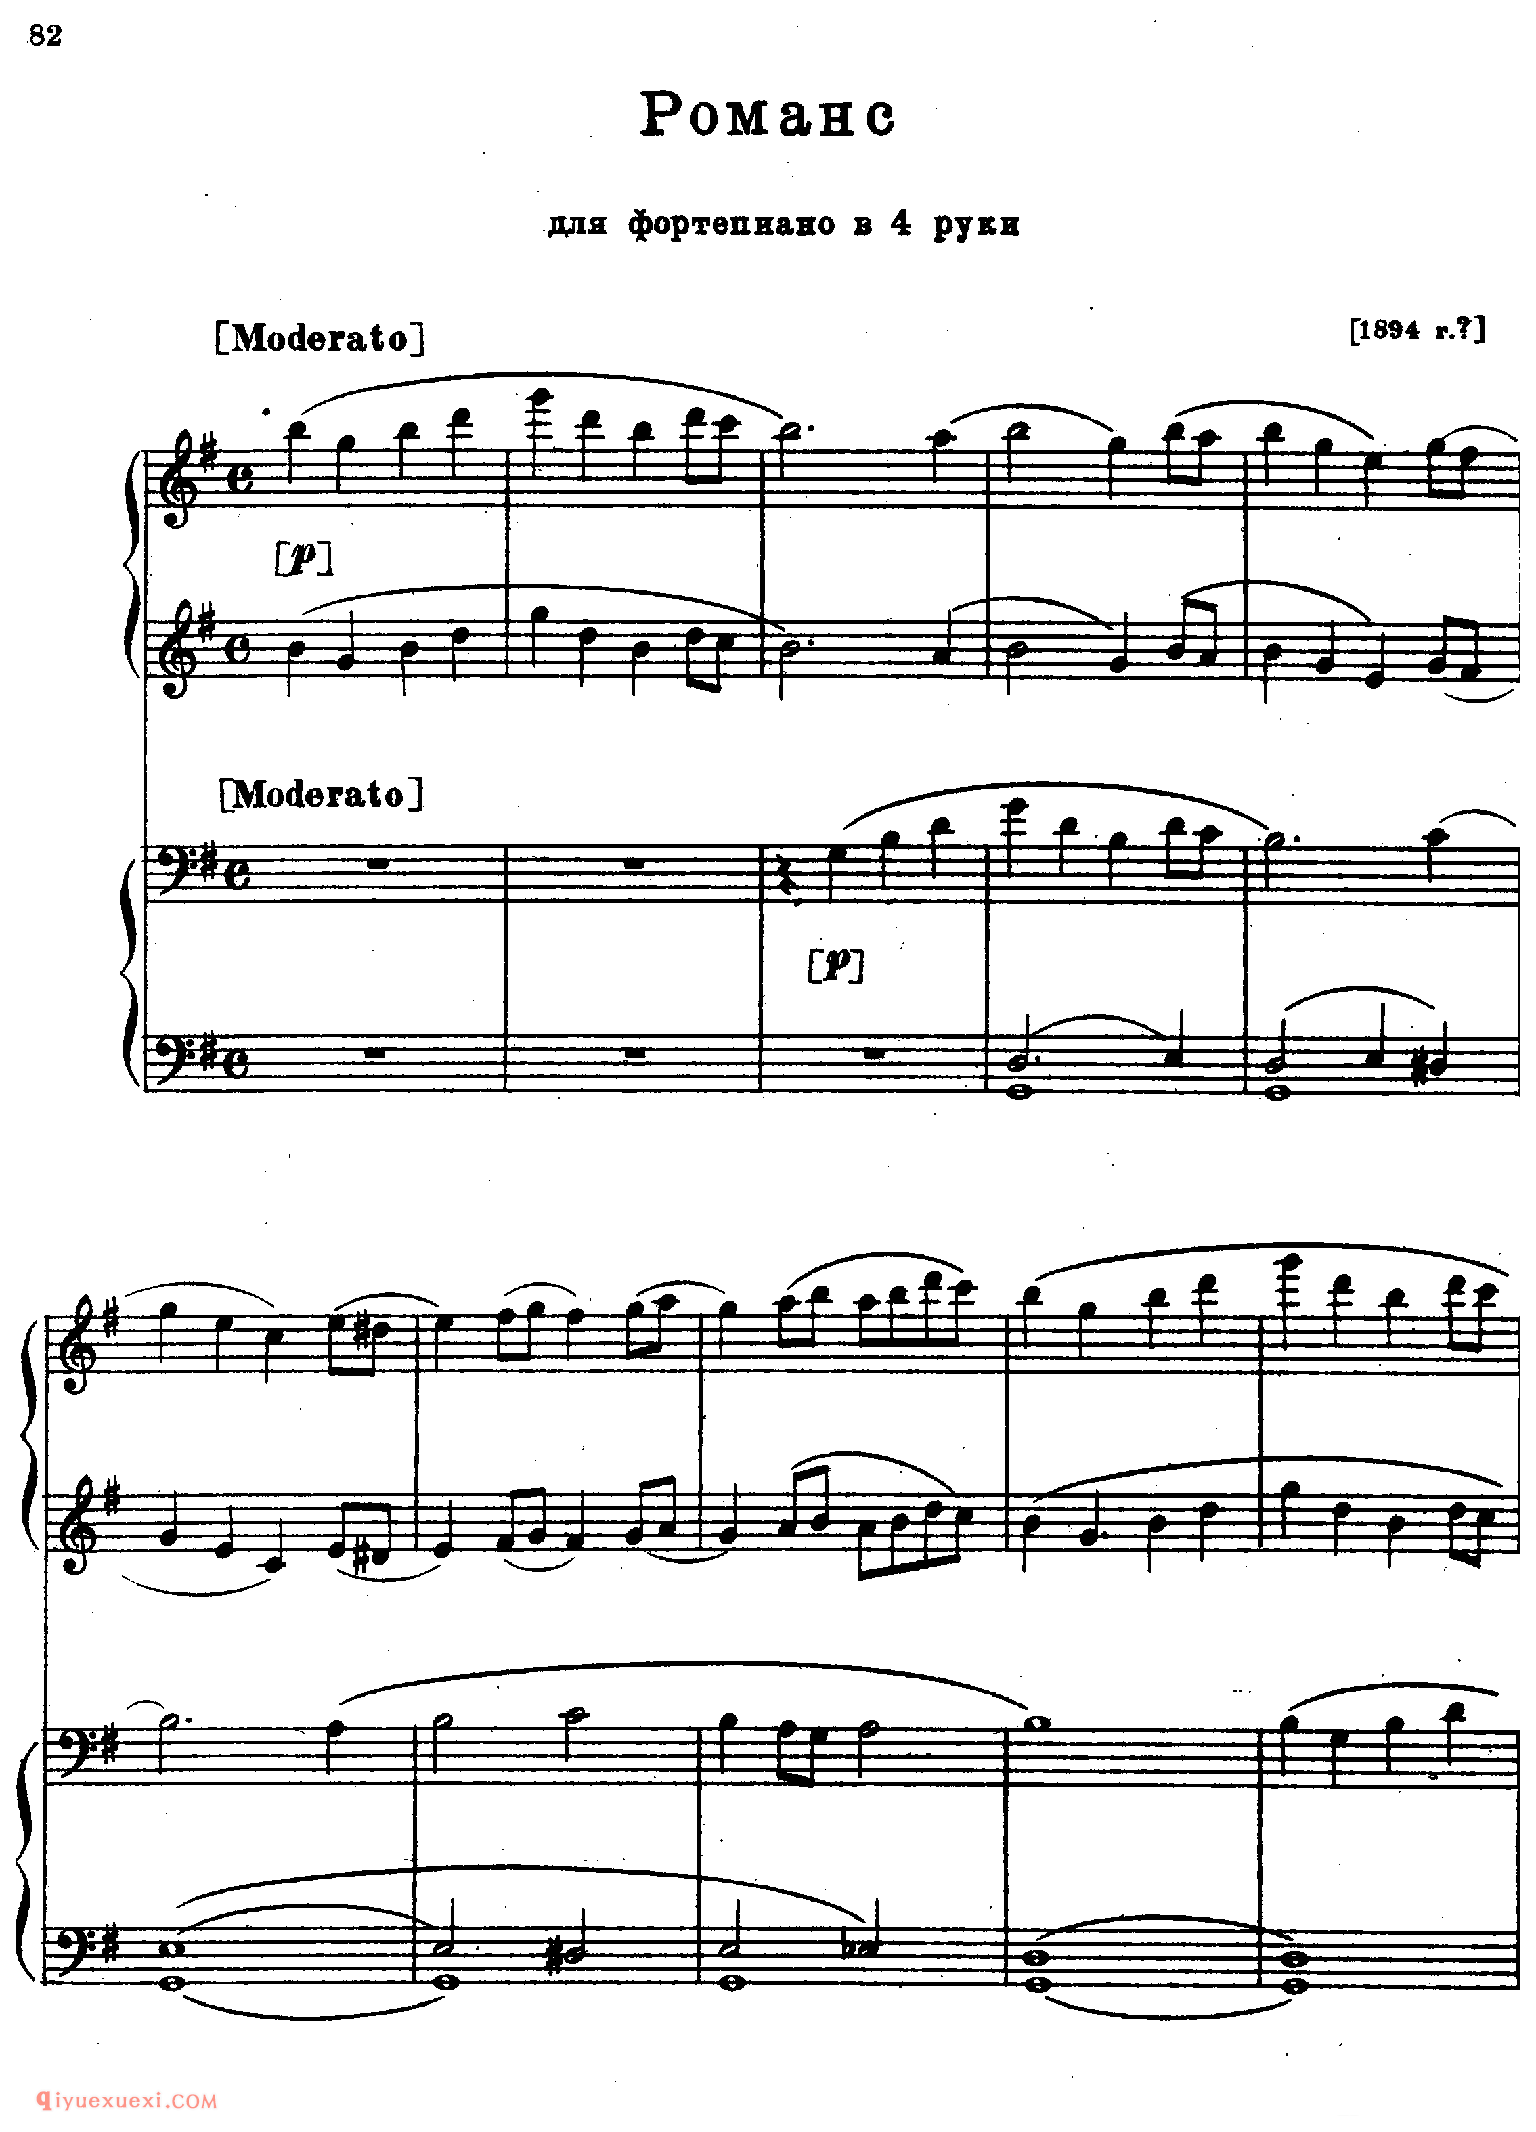 Rachmaninov - Romance in G Major for 4 hands_拉赫玛尼诺夫钢琴谱